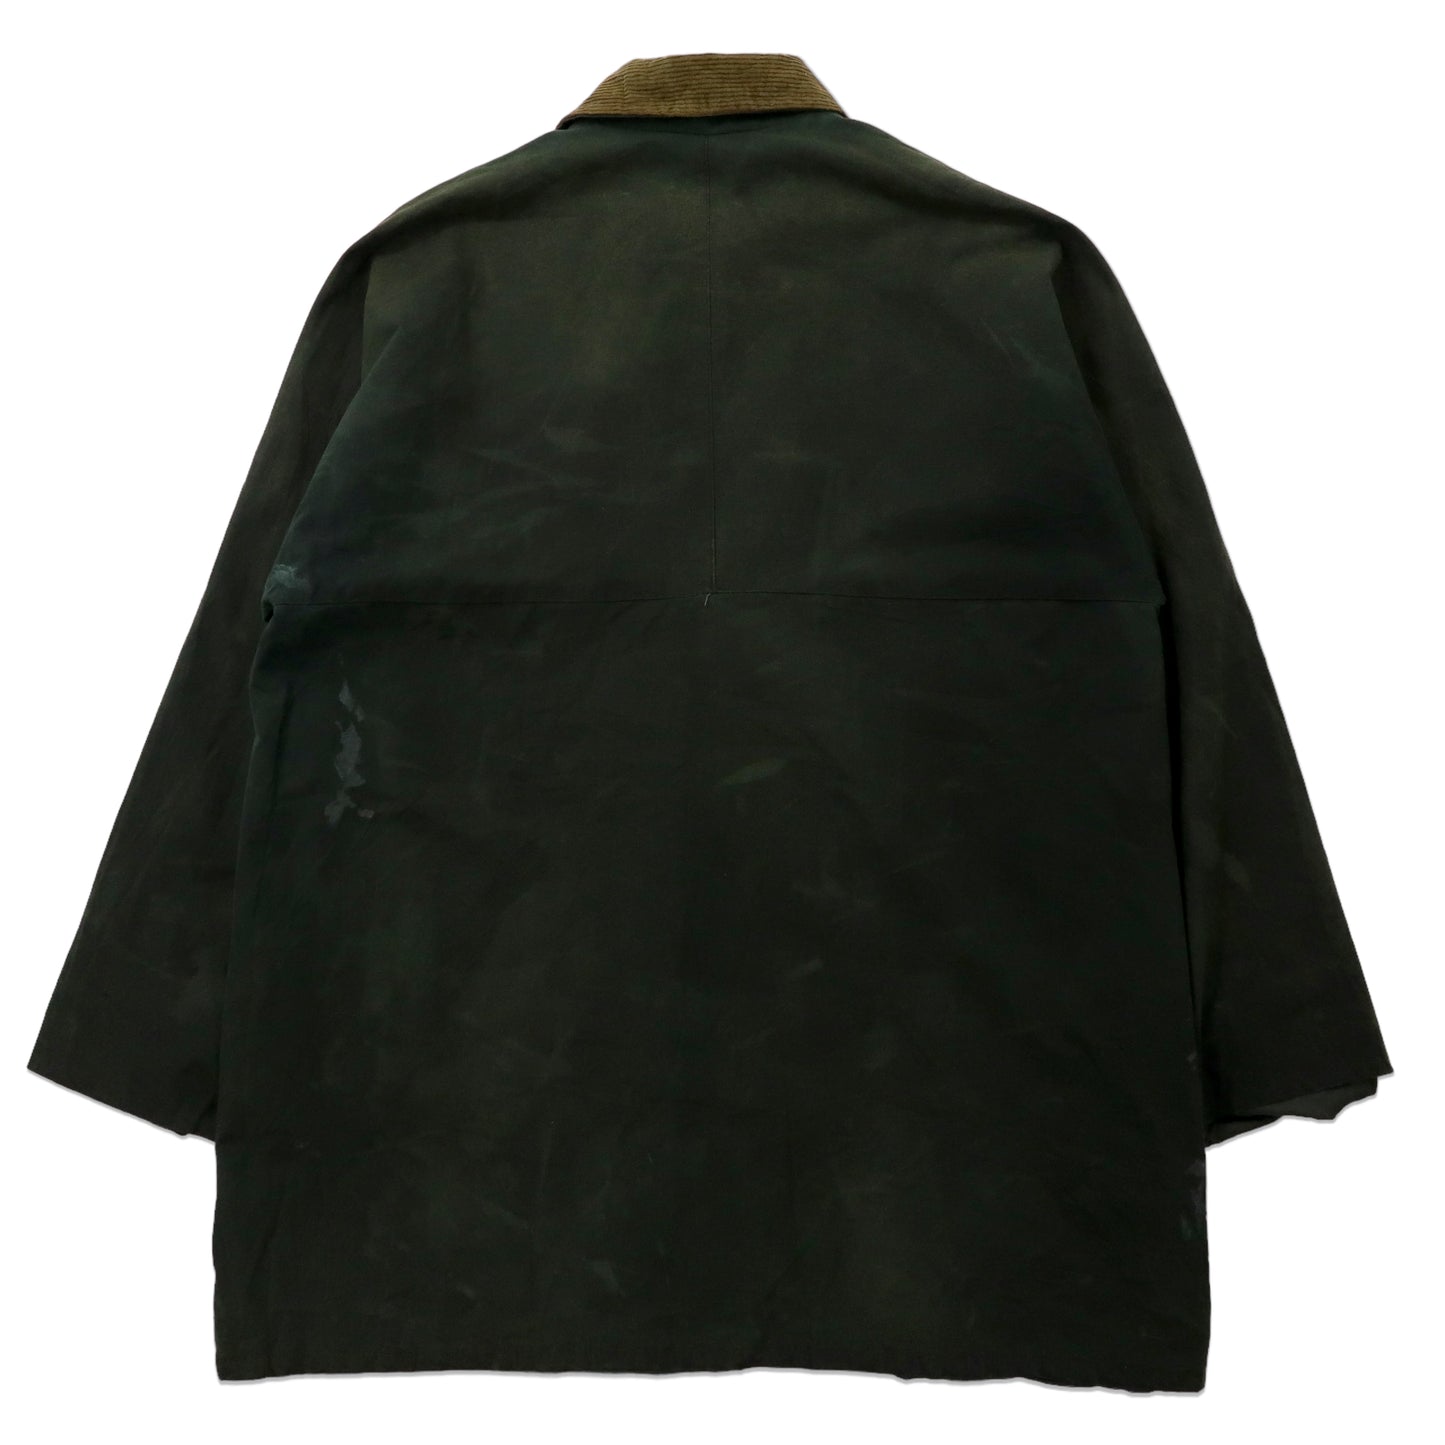 England MADE WORKS Oiled Jacket COAT XL Khaki Cotton Collar